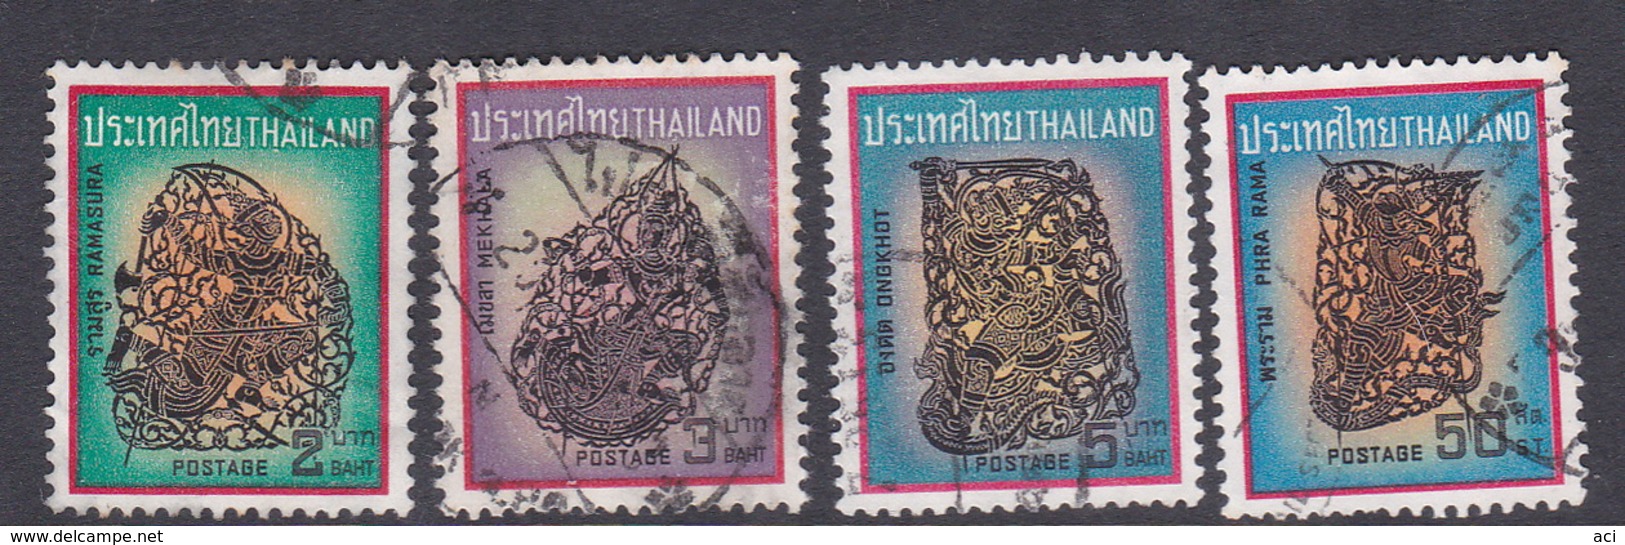 Thailand SG 636-639 1969 Nang Yai Show Theatre Used Set - Thailand